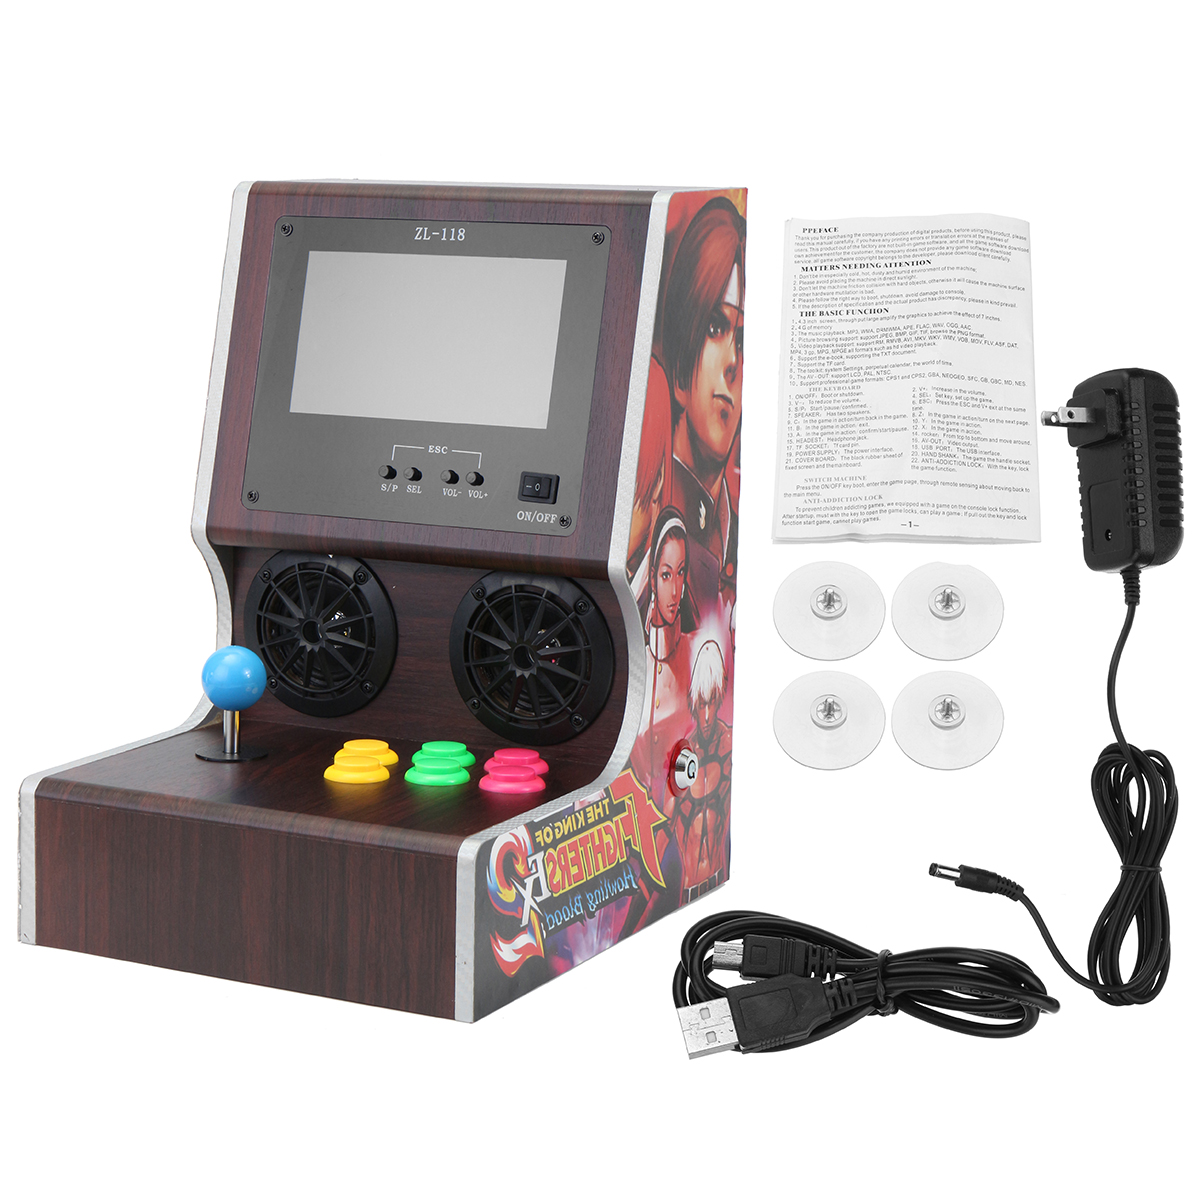 7-Inch-Screen-4G-Memory-Mini-Arcade-Game-Console-Support-E-book-TXT-TF-Card-1253193